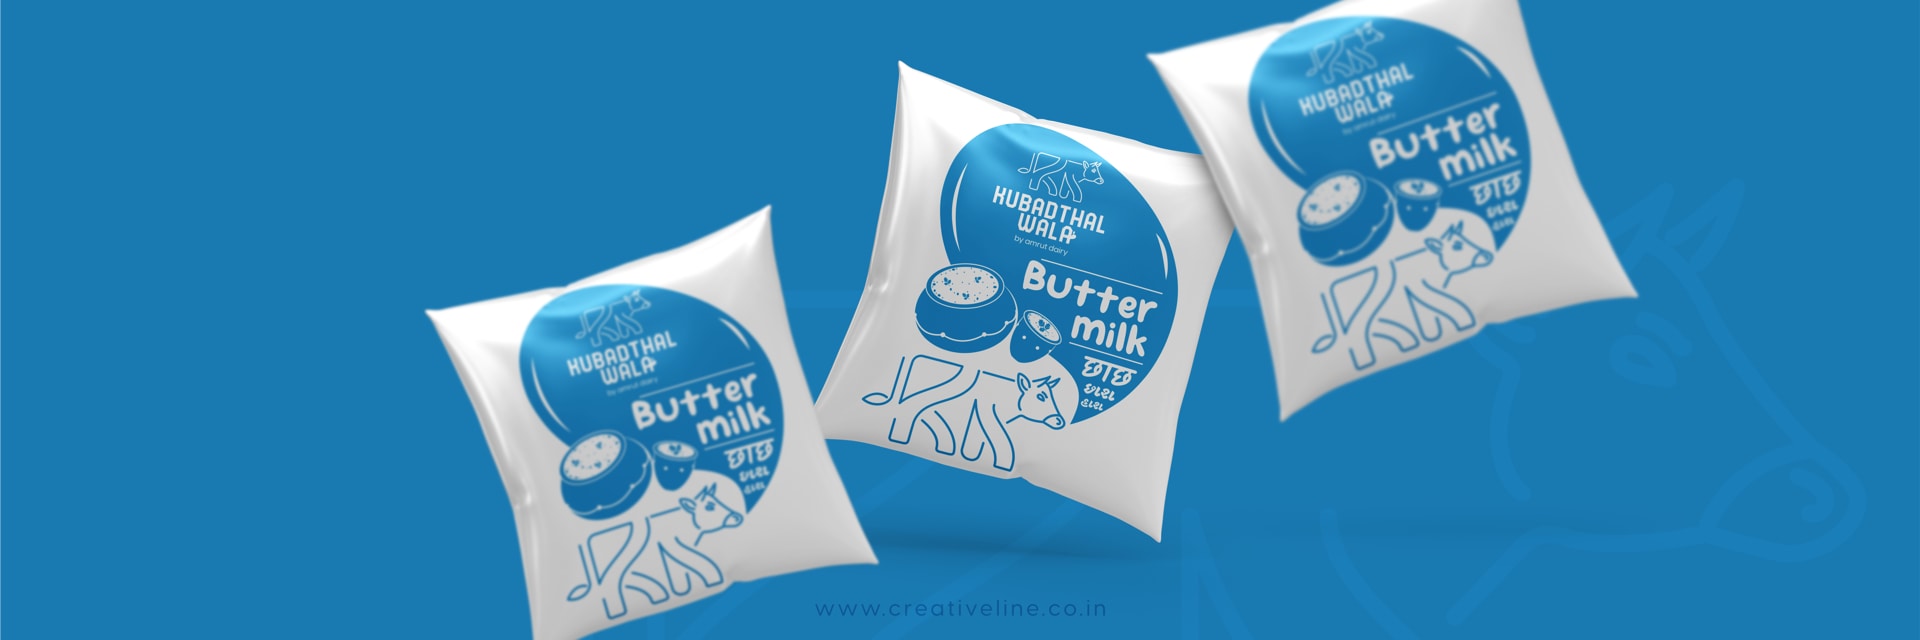 dairy buttermilk milk dahi Brand packaging Design Agency Creativeline Gandhinagar ahmedabad